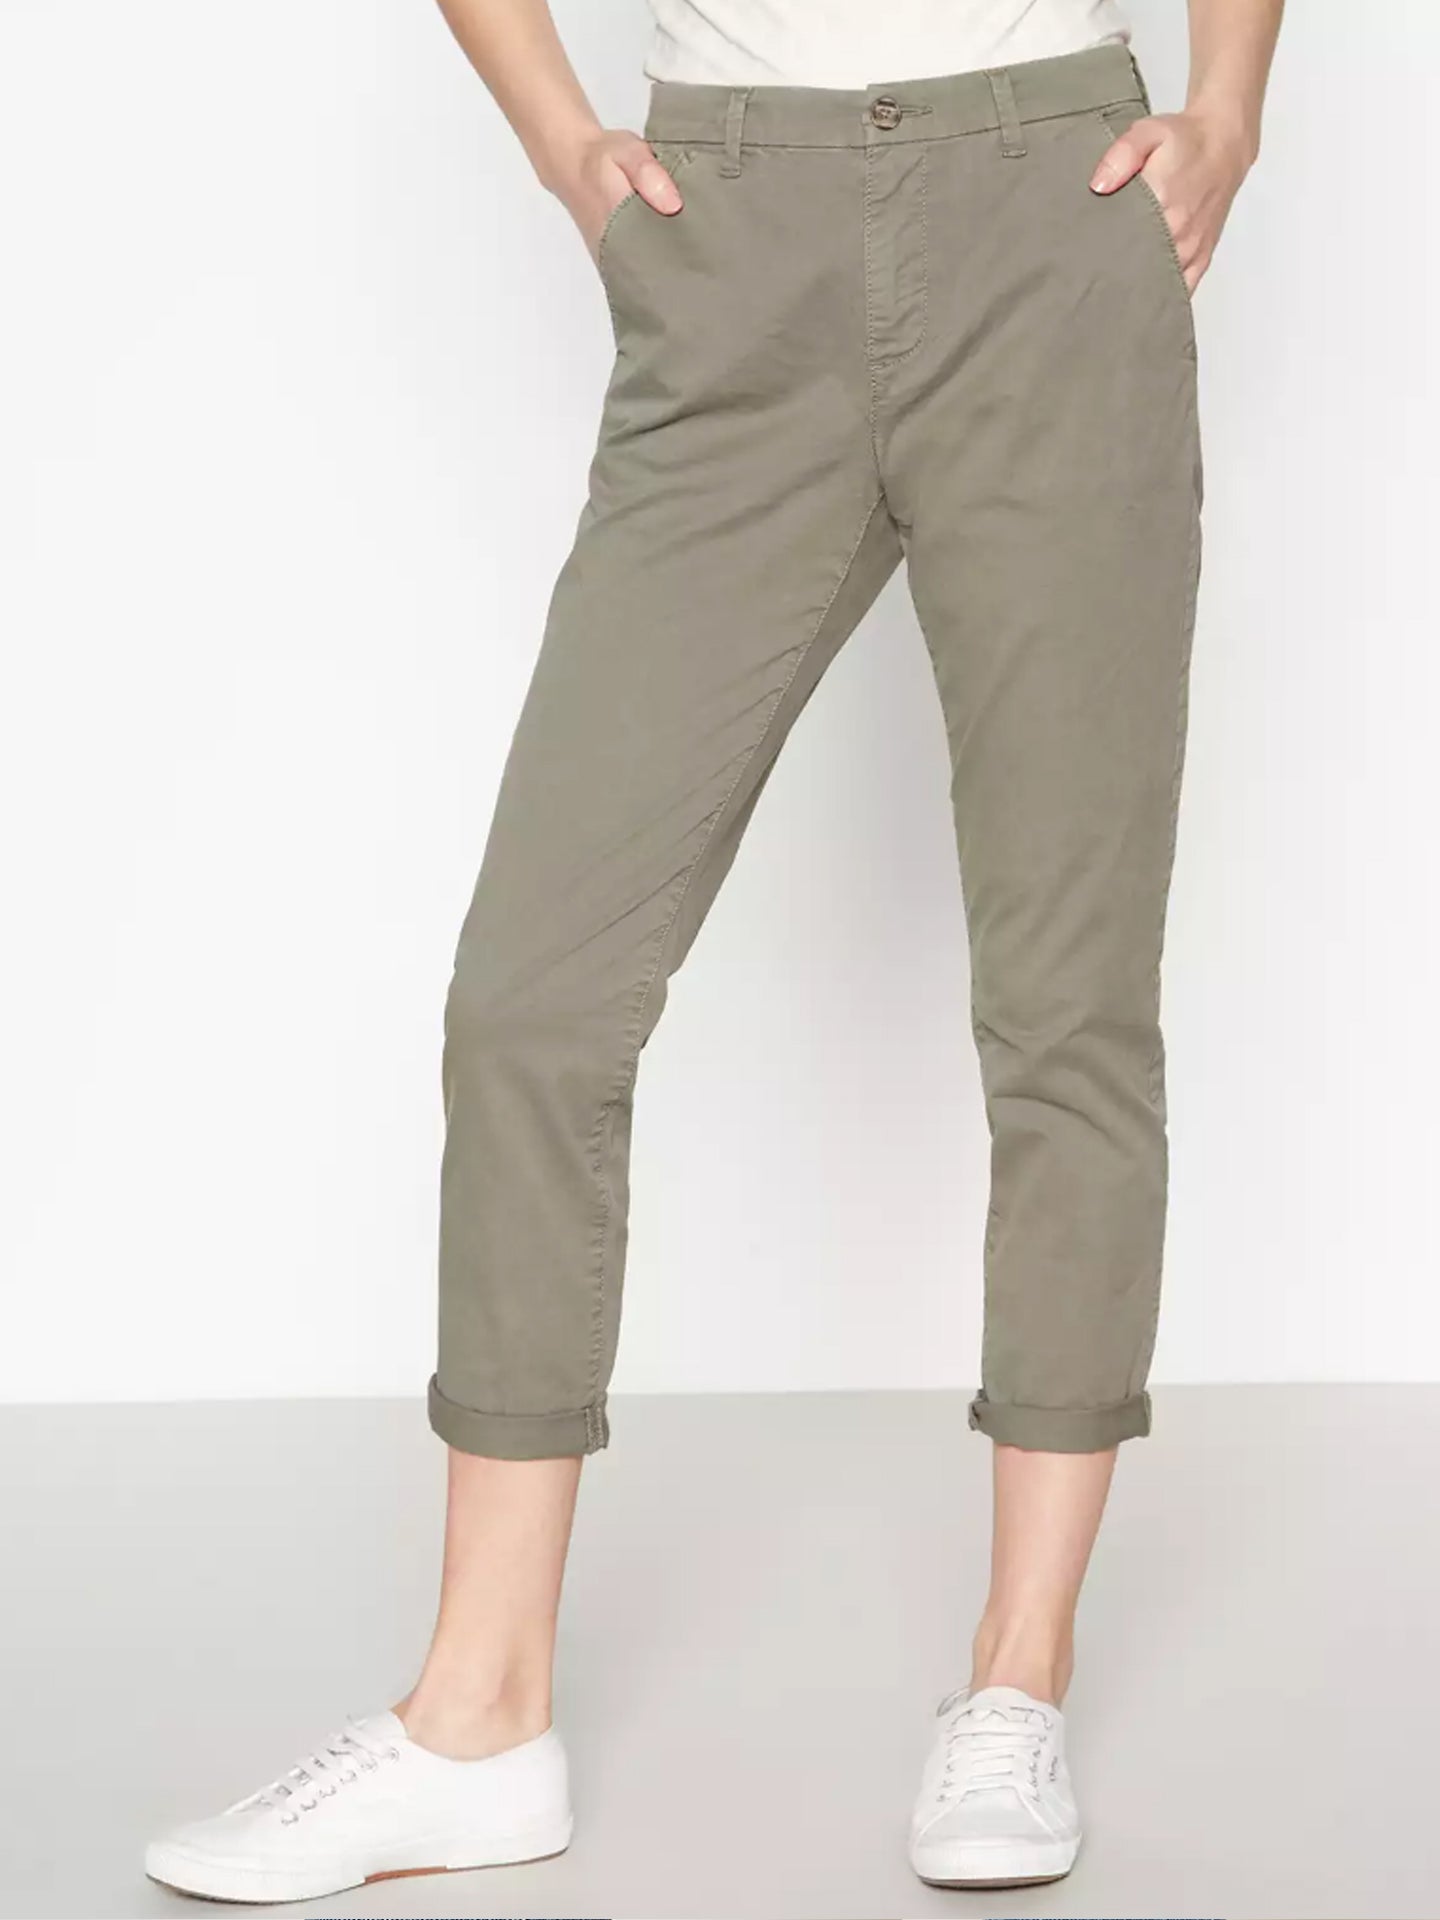 Ex Principles Women's Cropped Chino Trousers 3/4 Capri Trousers RRP £20